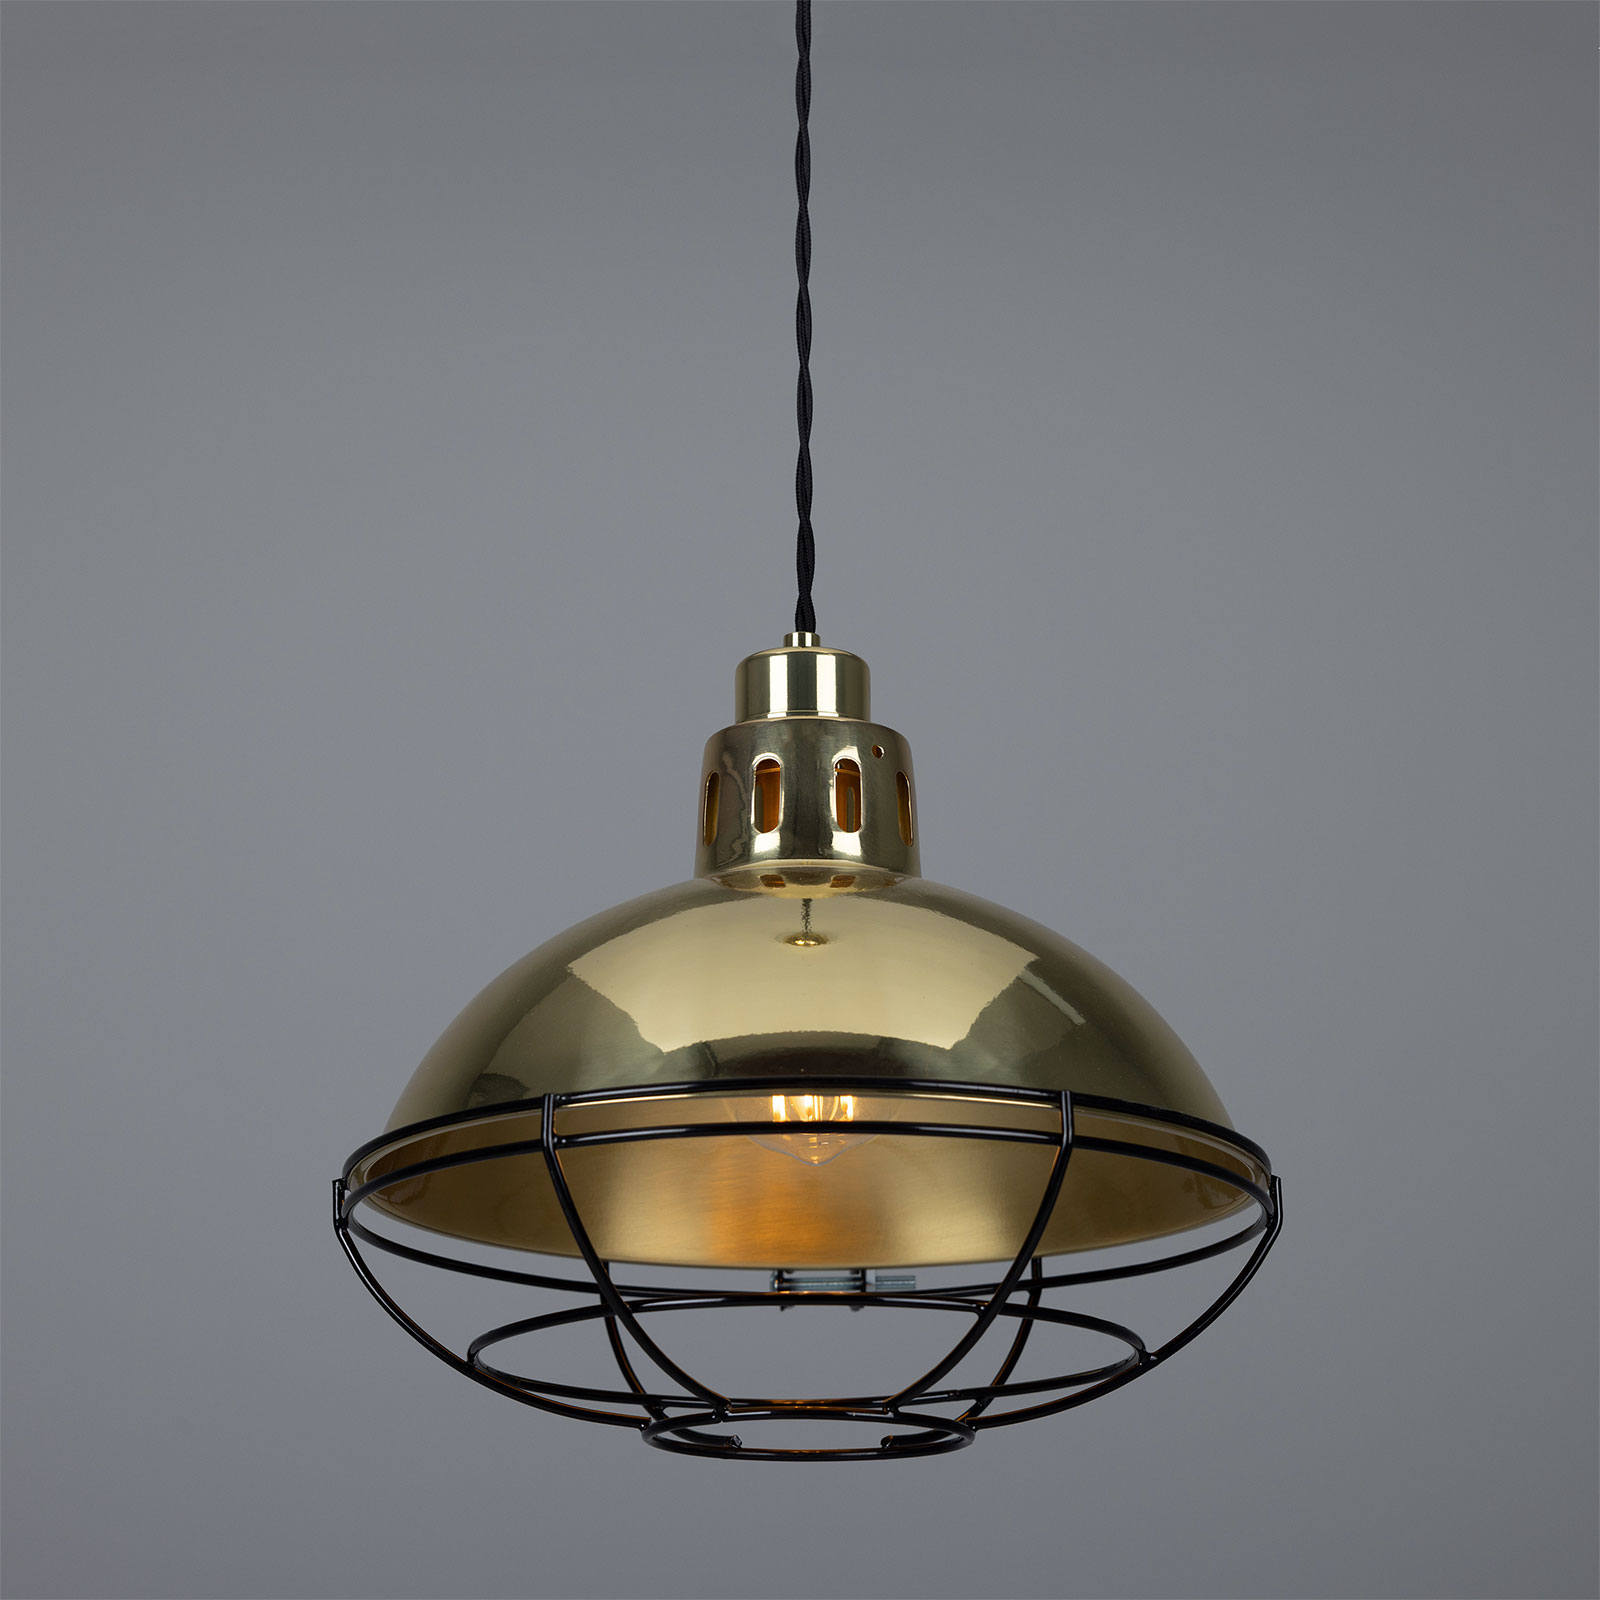 Klassische Fabriklampe aus Messing mit Schutzgitter-Käfig, 32 cm: Messing poliert